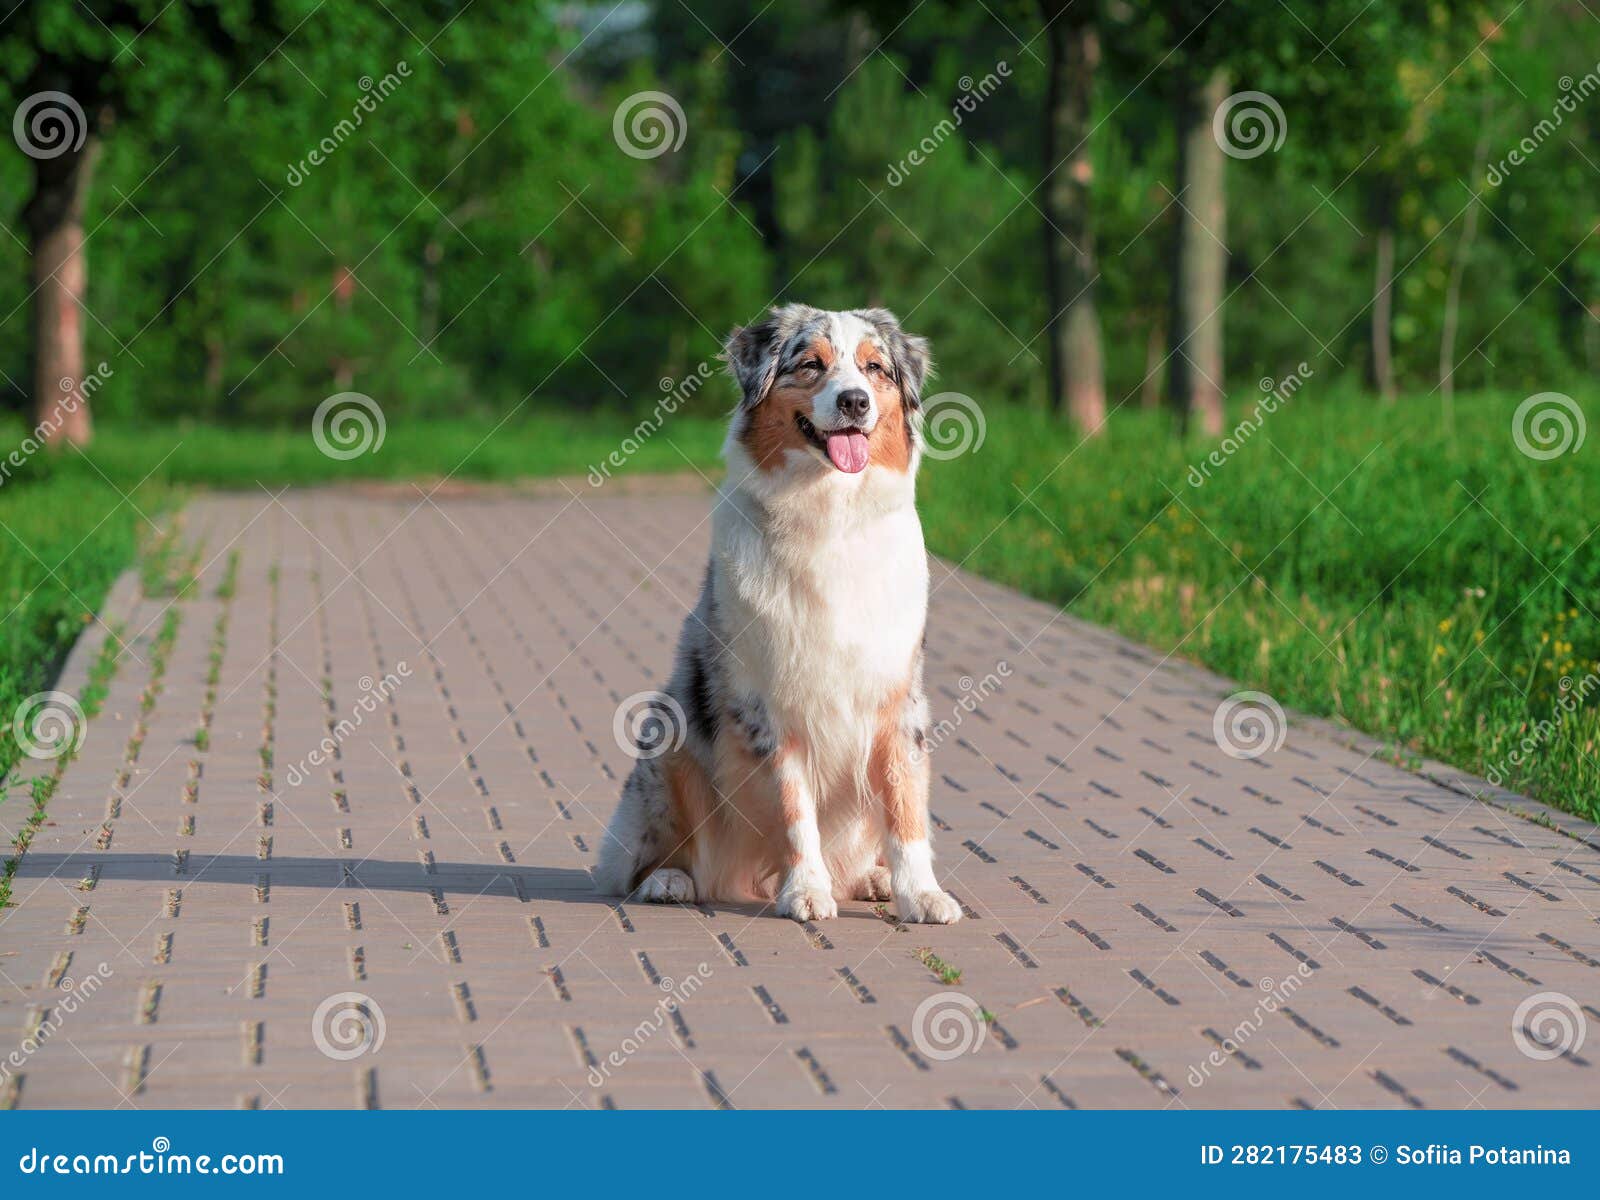 Australian Shepherd - Sidewalk Dog